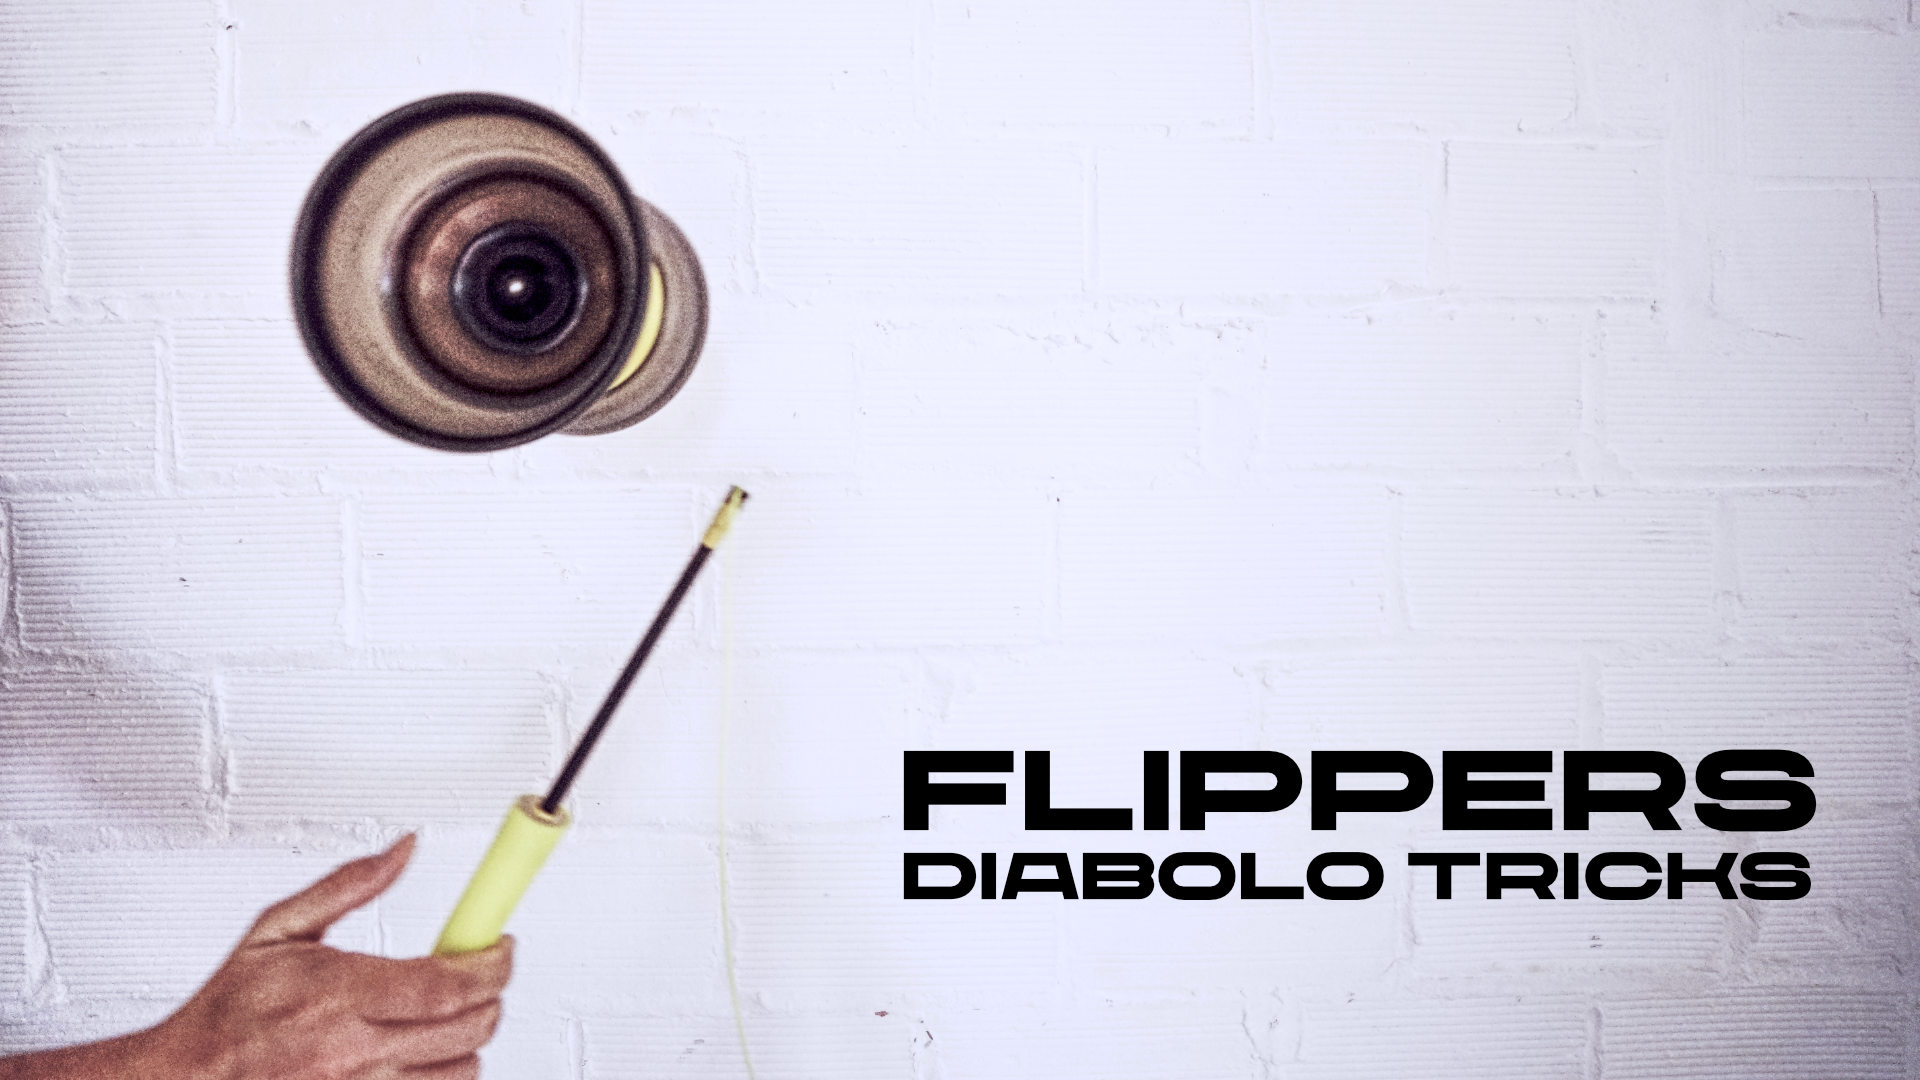 Flippers, a dynamic diabolo trick